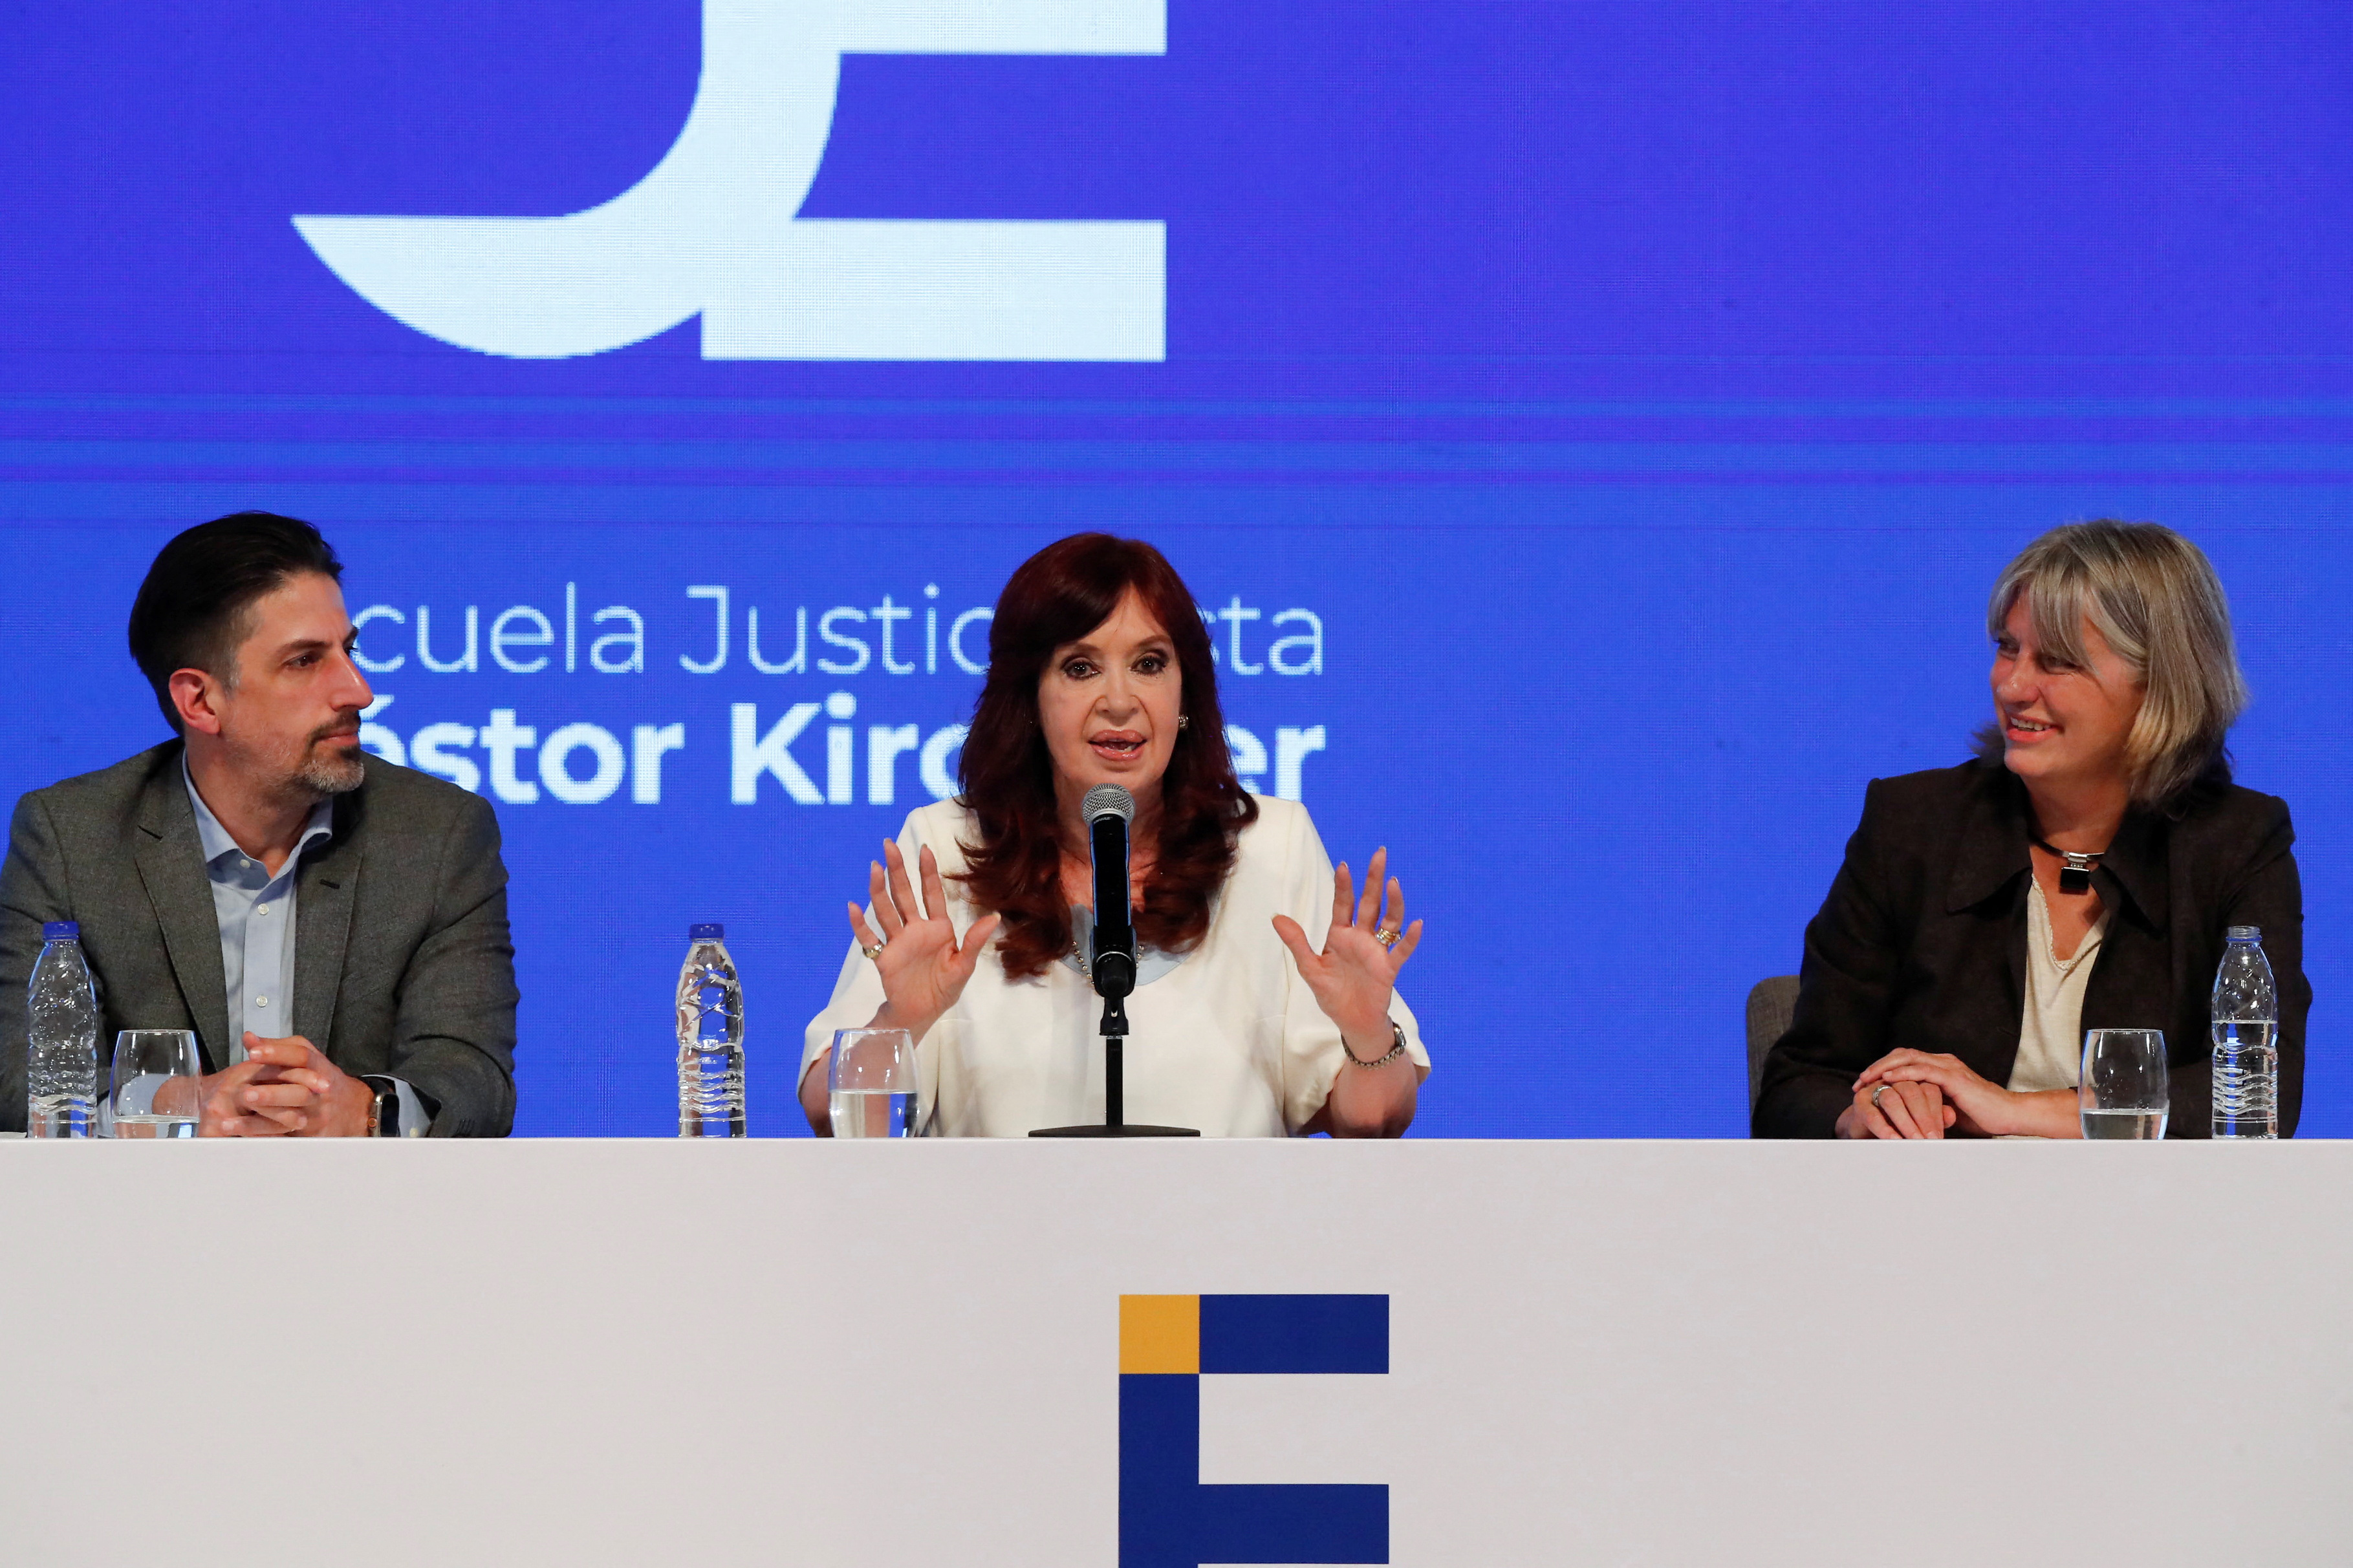 La vicepresidente Cristina Kirchner, en un pasaje de su clase magistral en La Plata. REUTERS/Agustin Marcarian